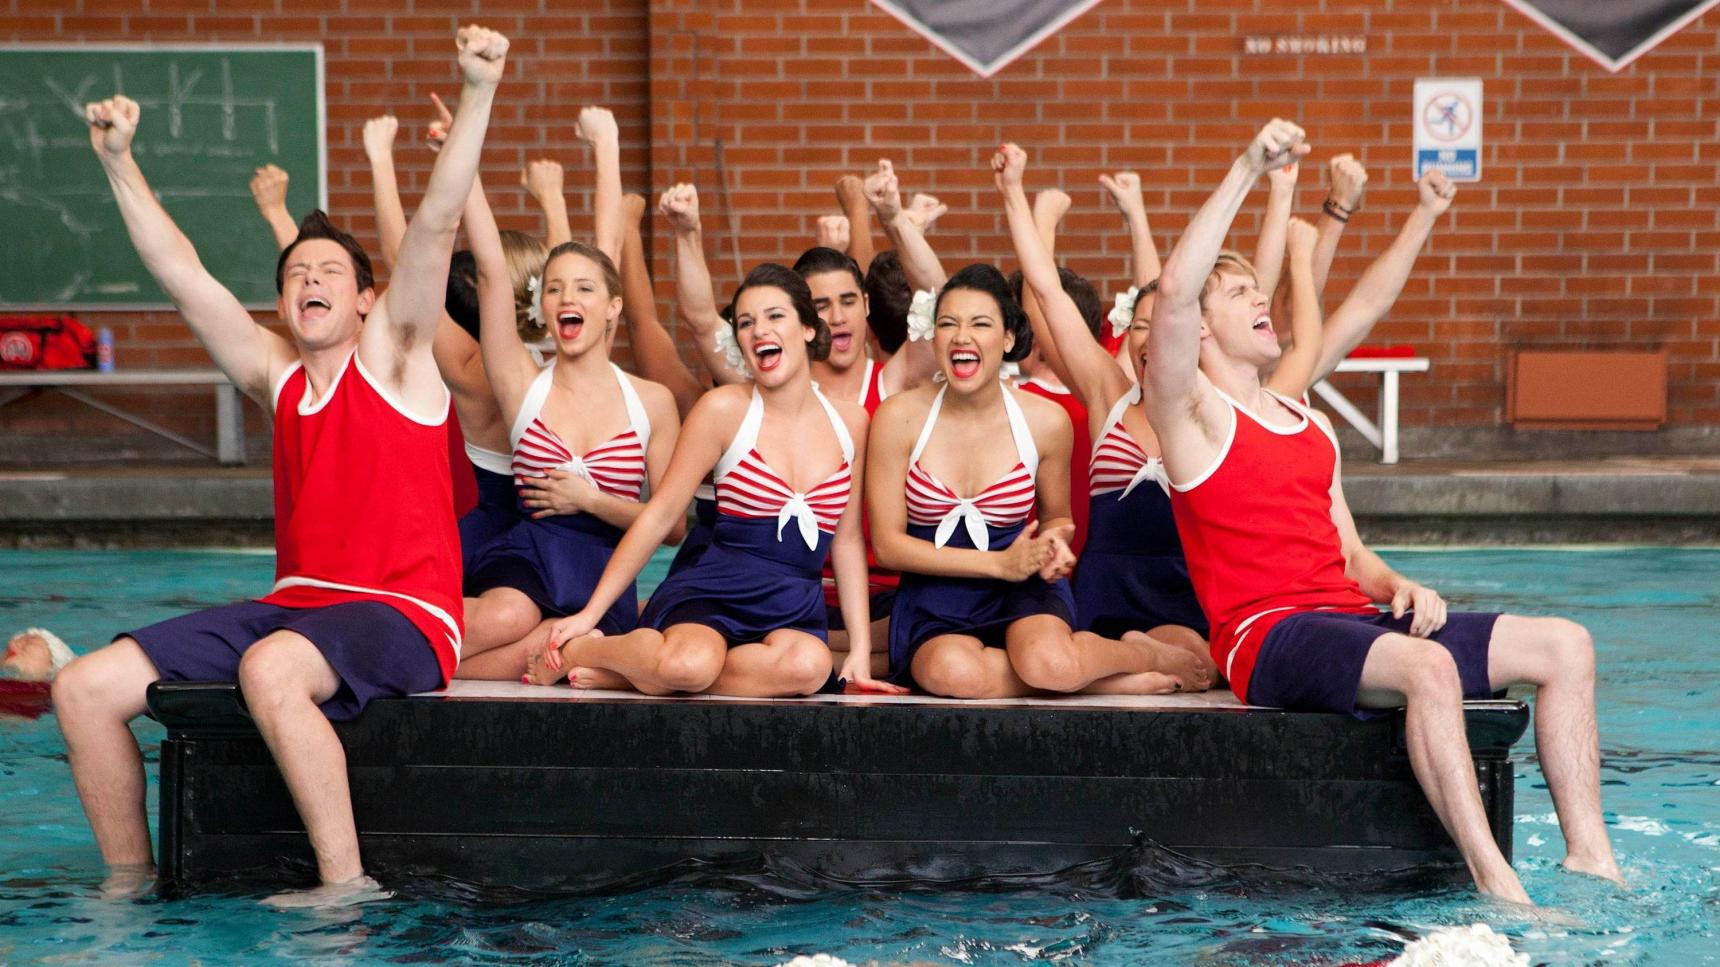 Poster del episodio 10 de Glee online